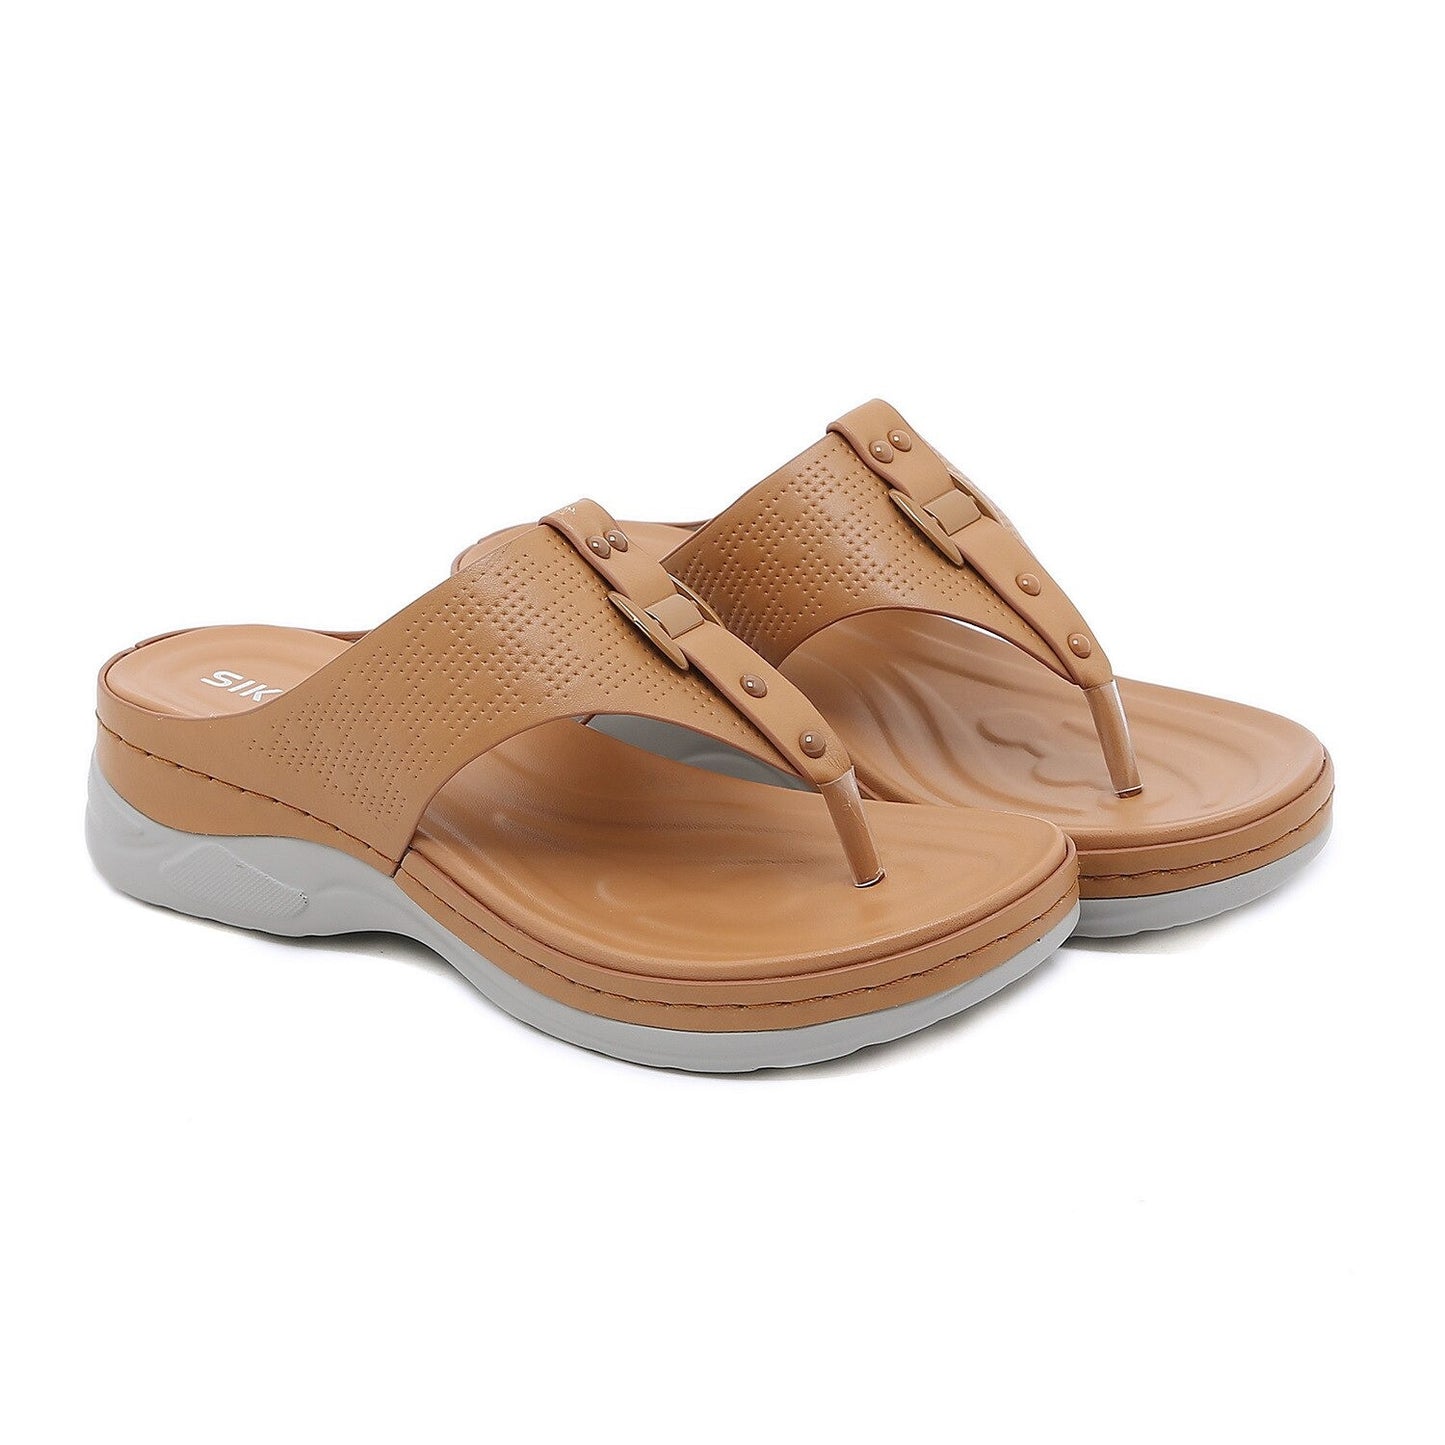 OCW Women Platform Sandals Retro Vintage Summer Beach Comfortable Flip Flops